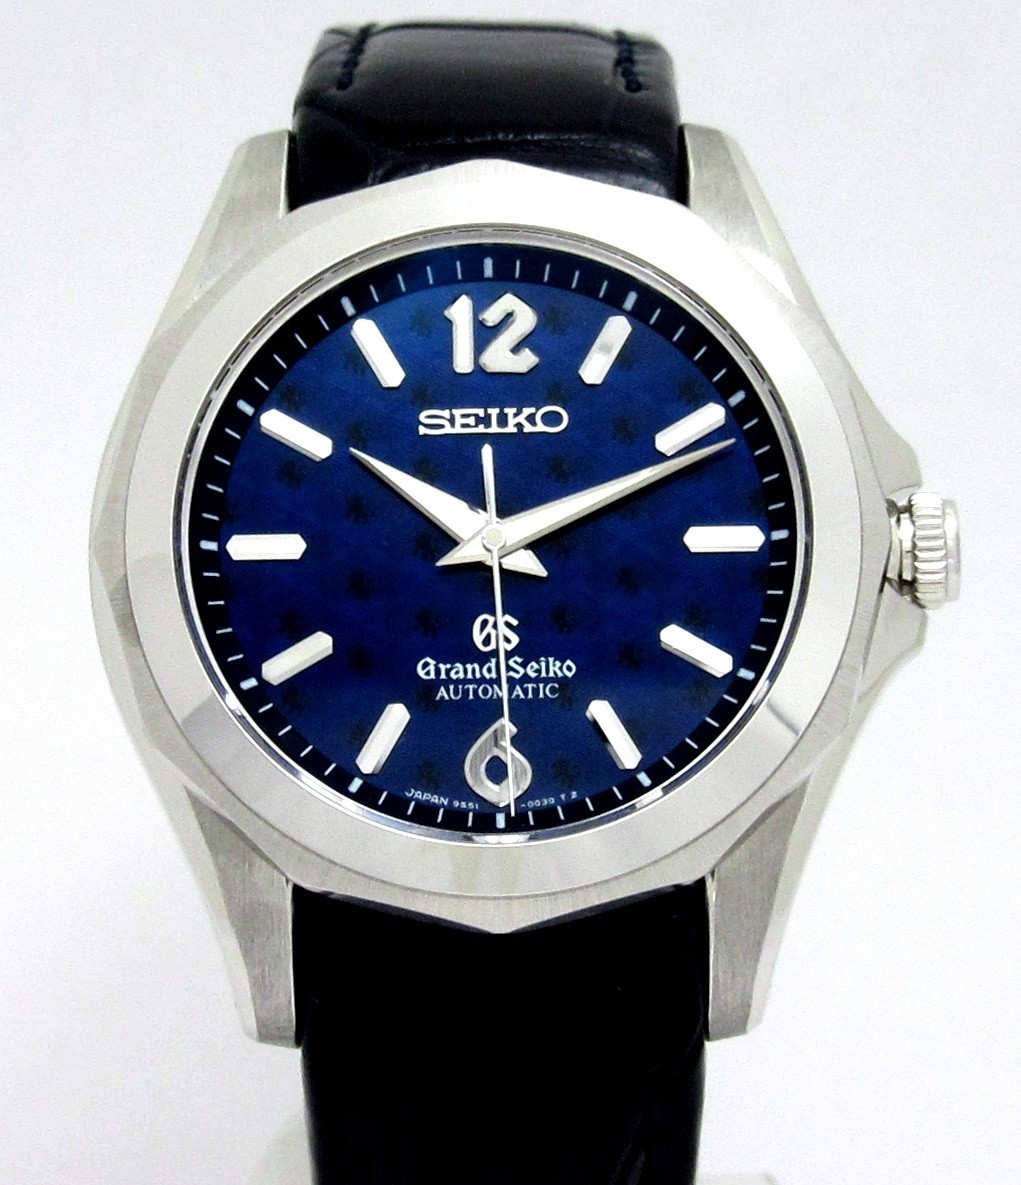 K18WG 40th記念 500本限定 SEIKO セイコー  グランドセイコー  SBGR013 9S51-0030  メンズ 腕時計